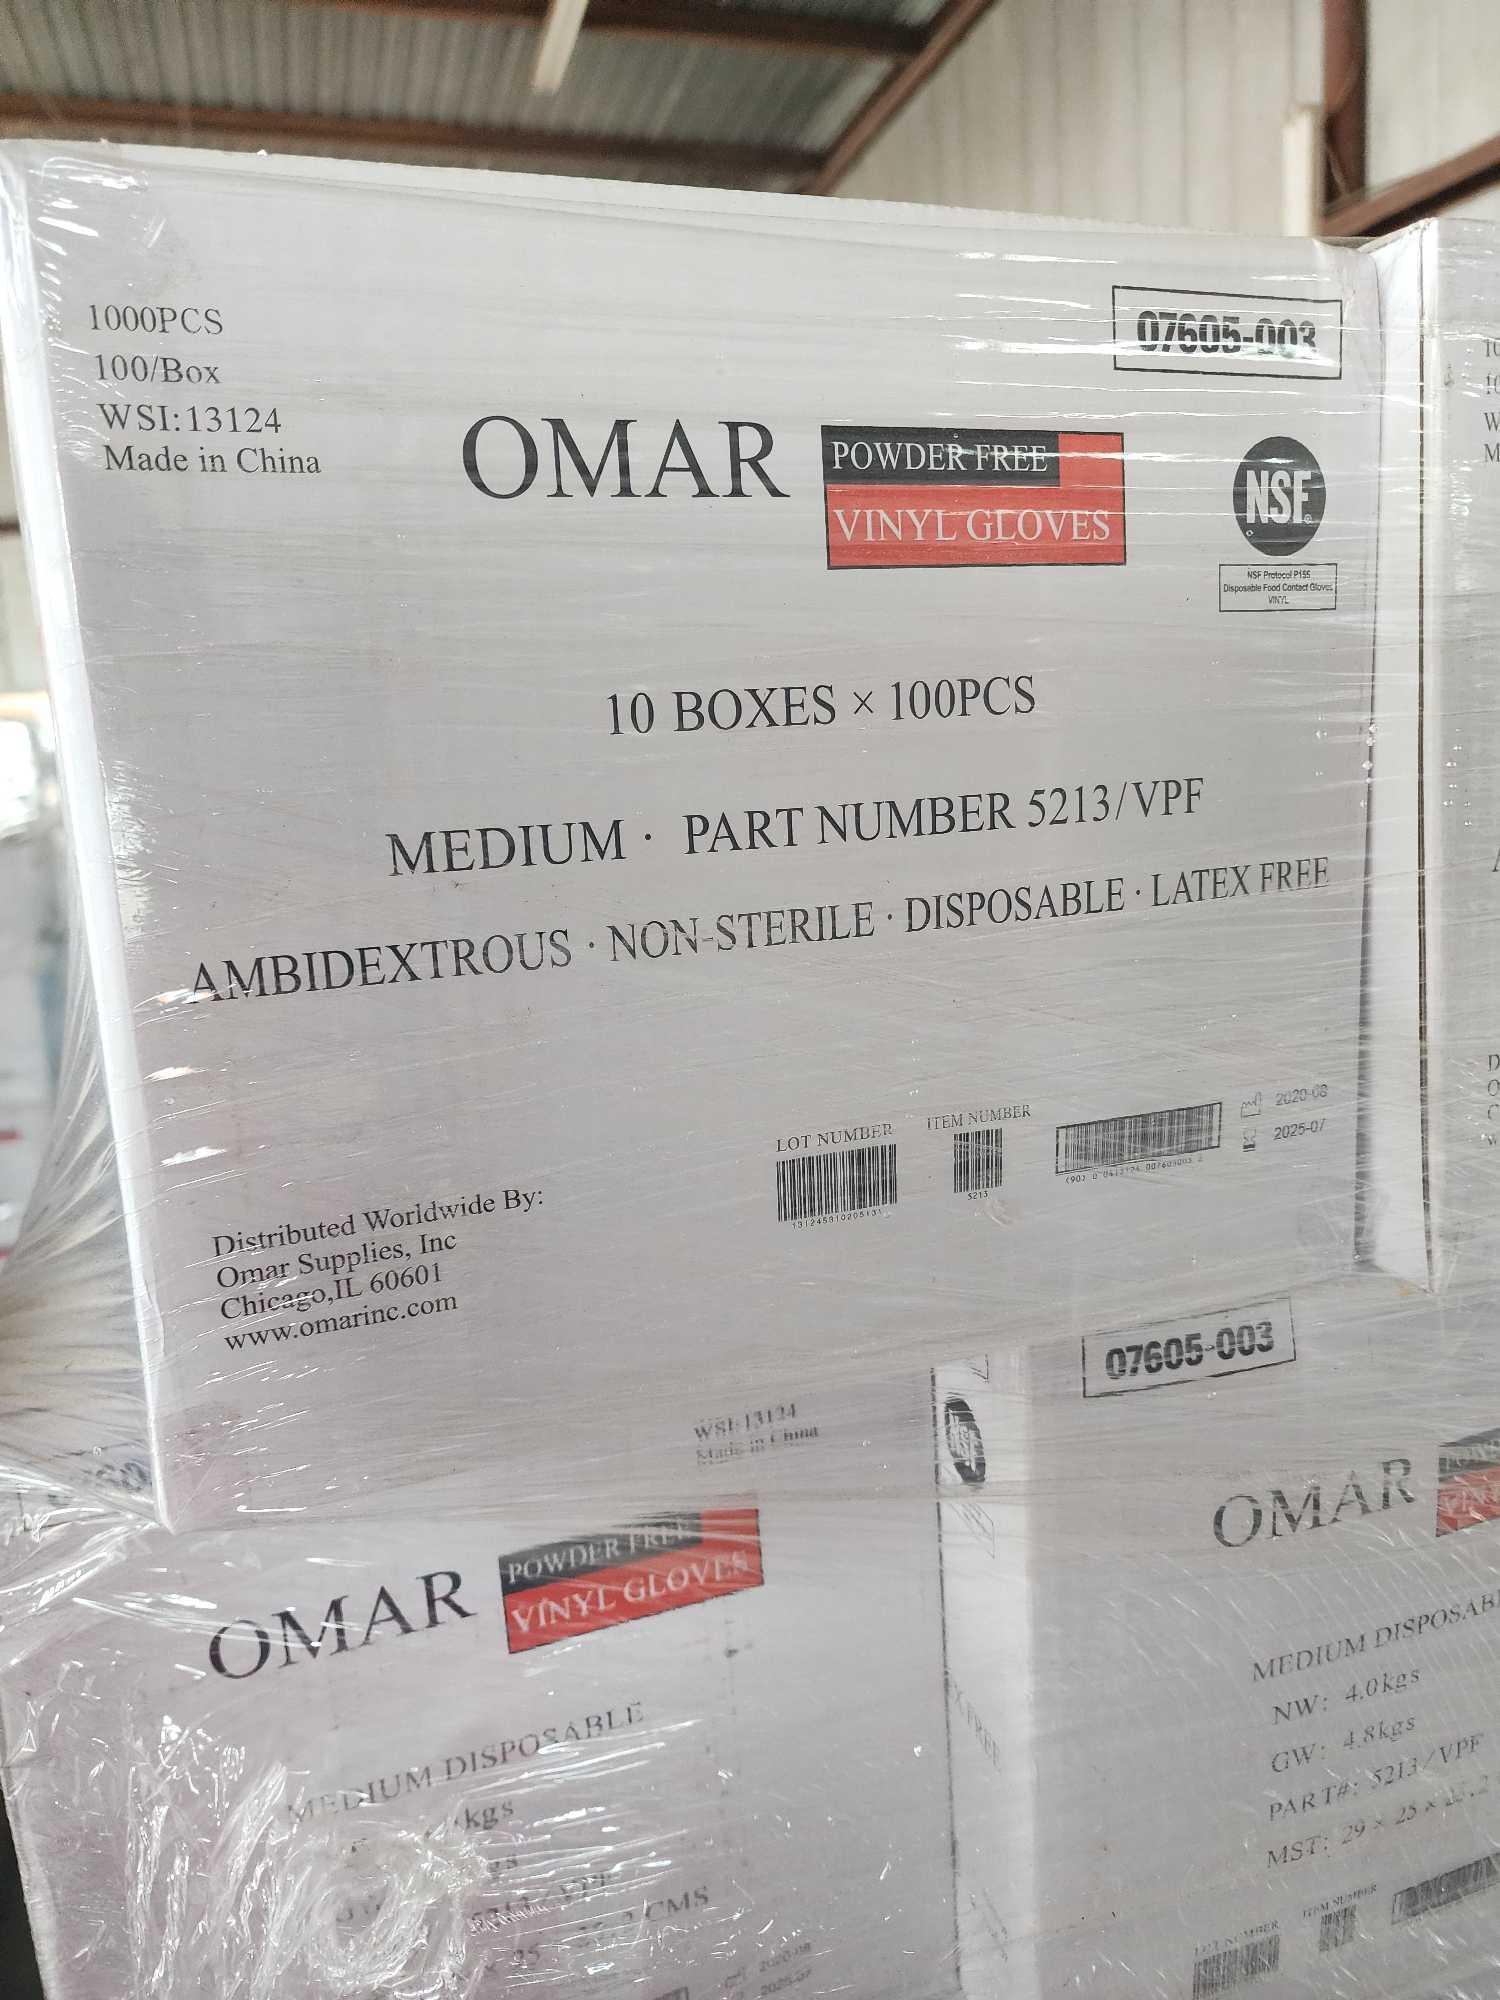 Boxes of Omar Powder-free Vinyl Gloves on 2 Pallets